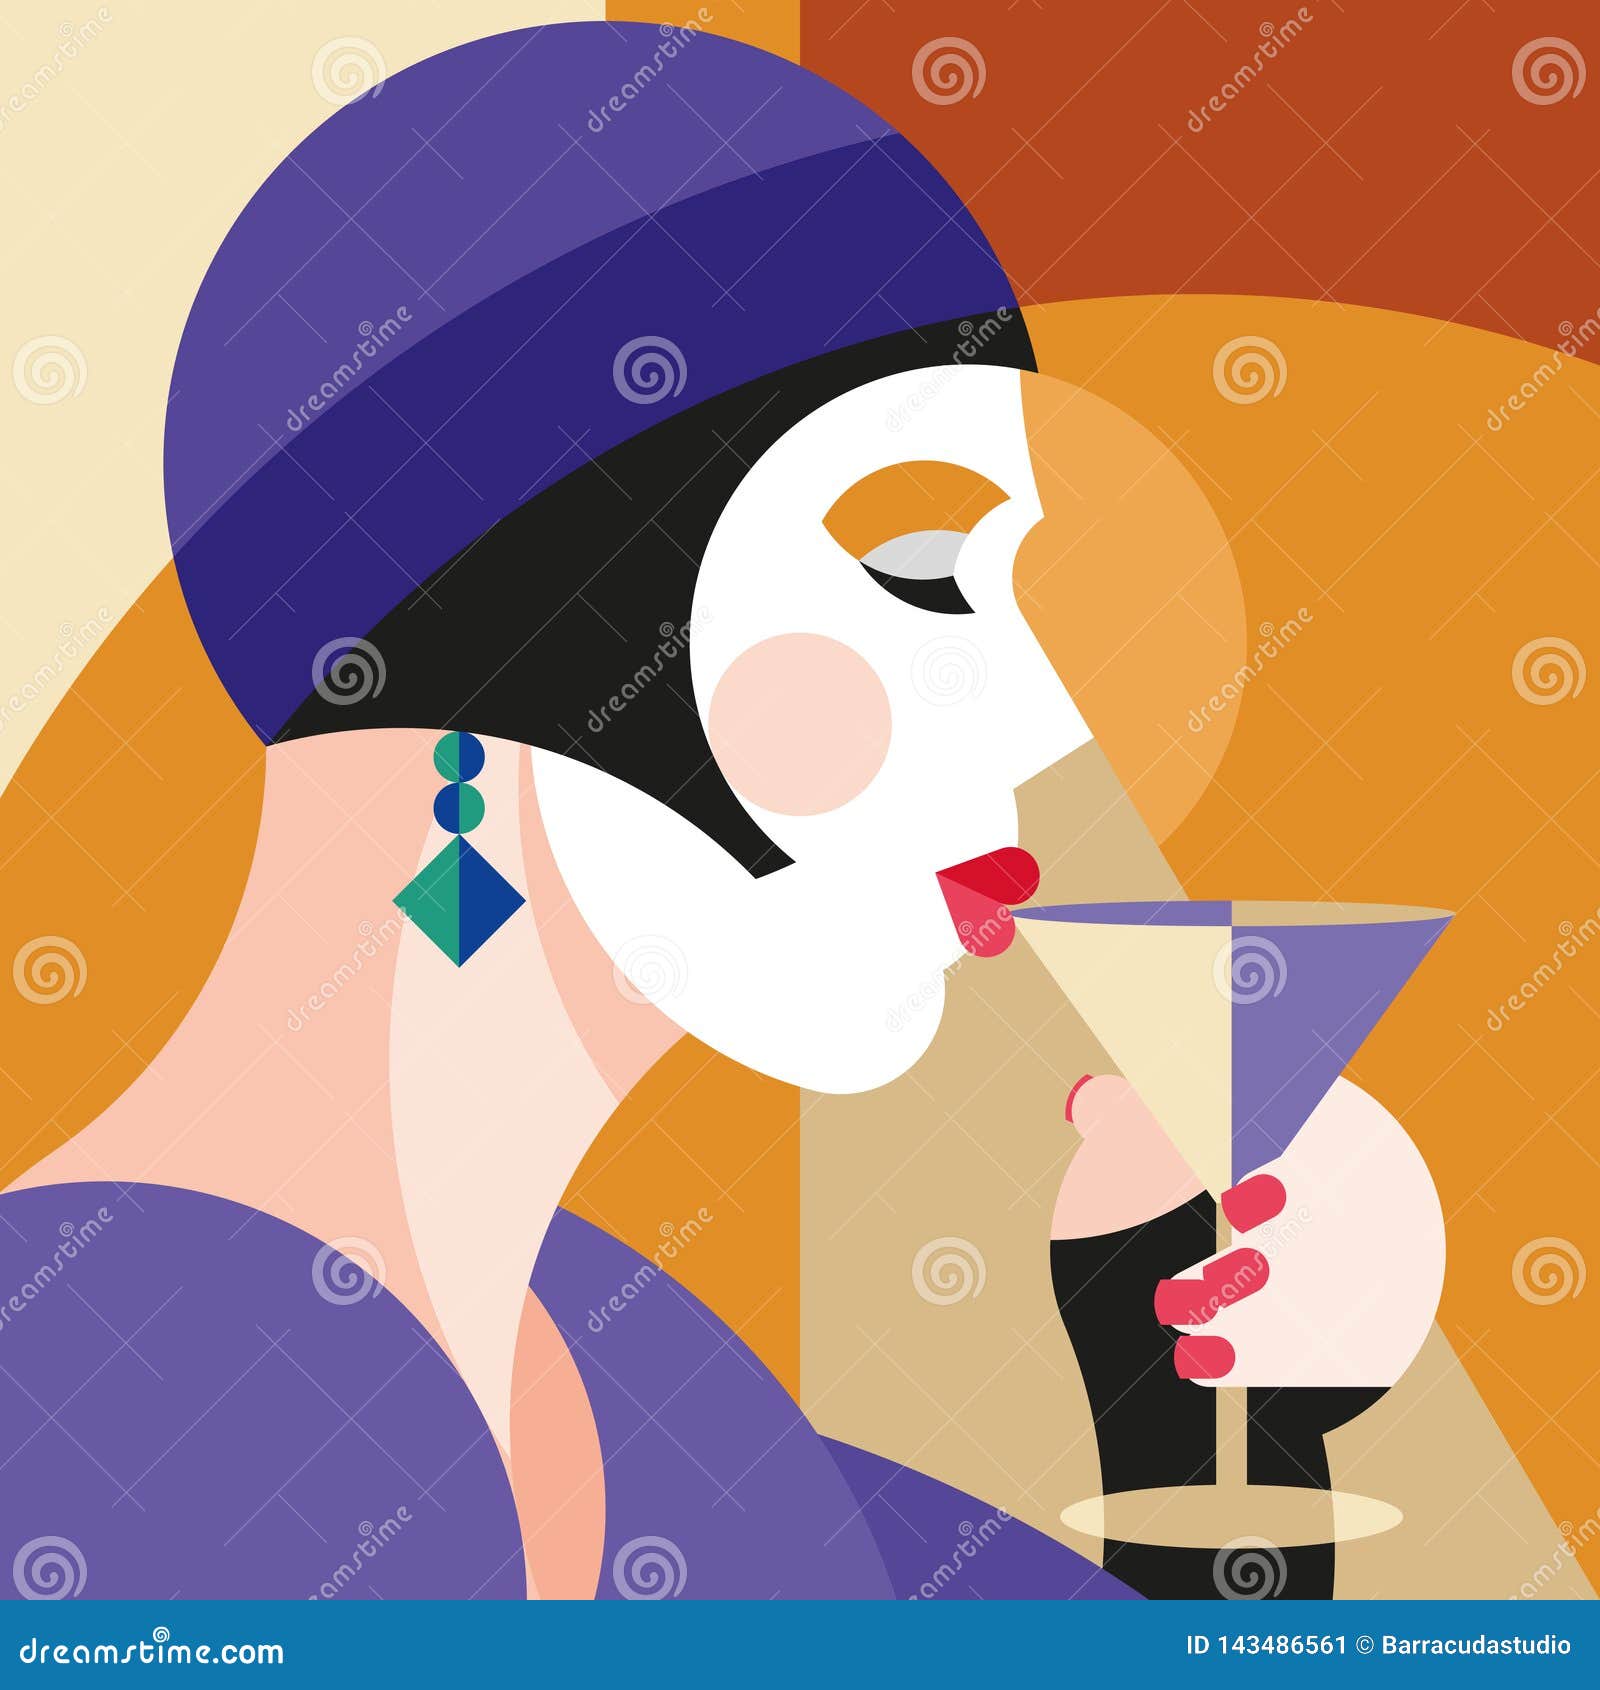 fashionable stylish woman drinking wine. modernist style woman in a hat with stylish headdress. modernism style art.